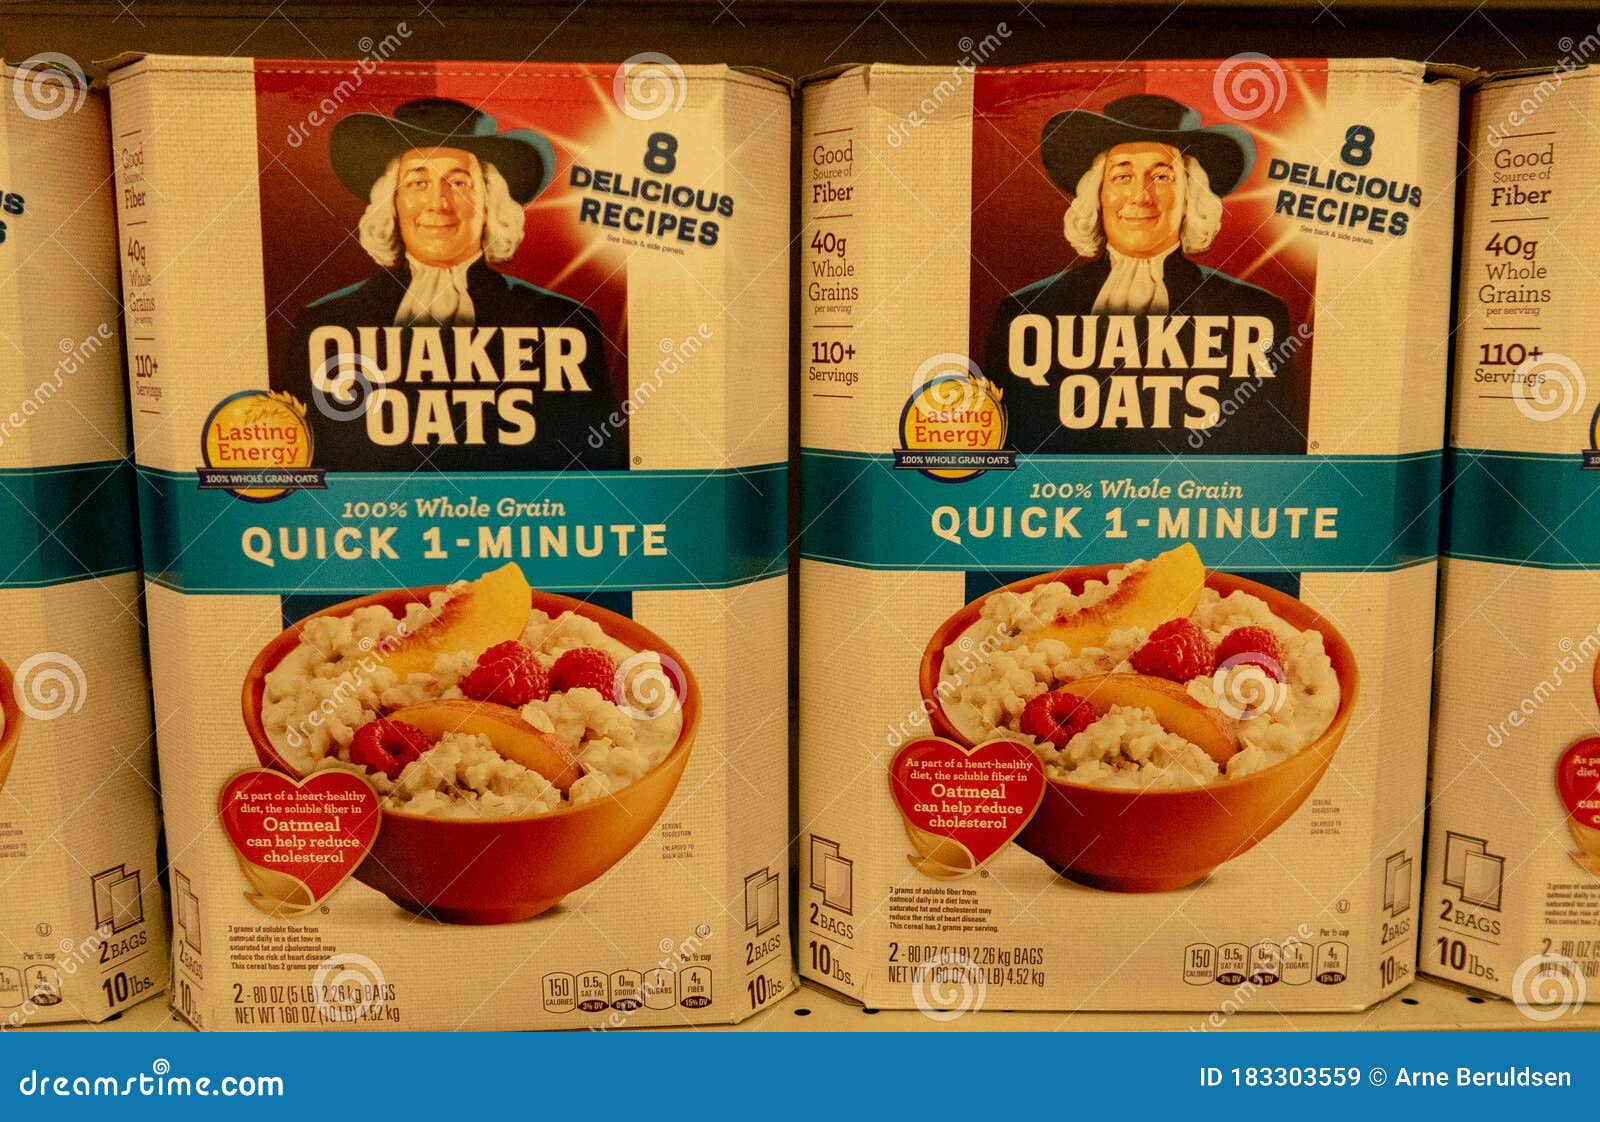 Quaker, Oats Old Fashioned Oatmeal, 10 lbs